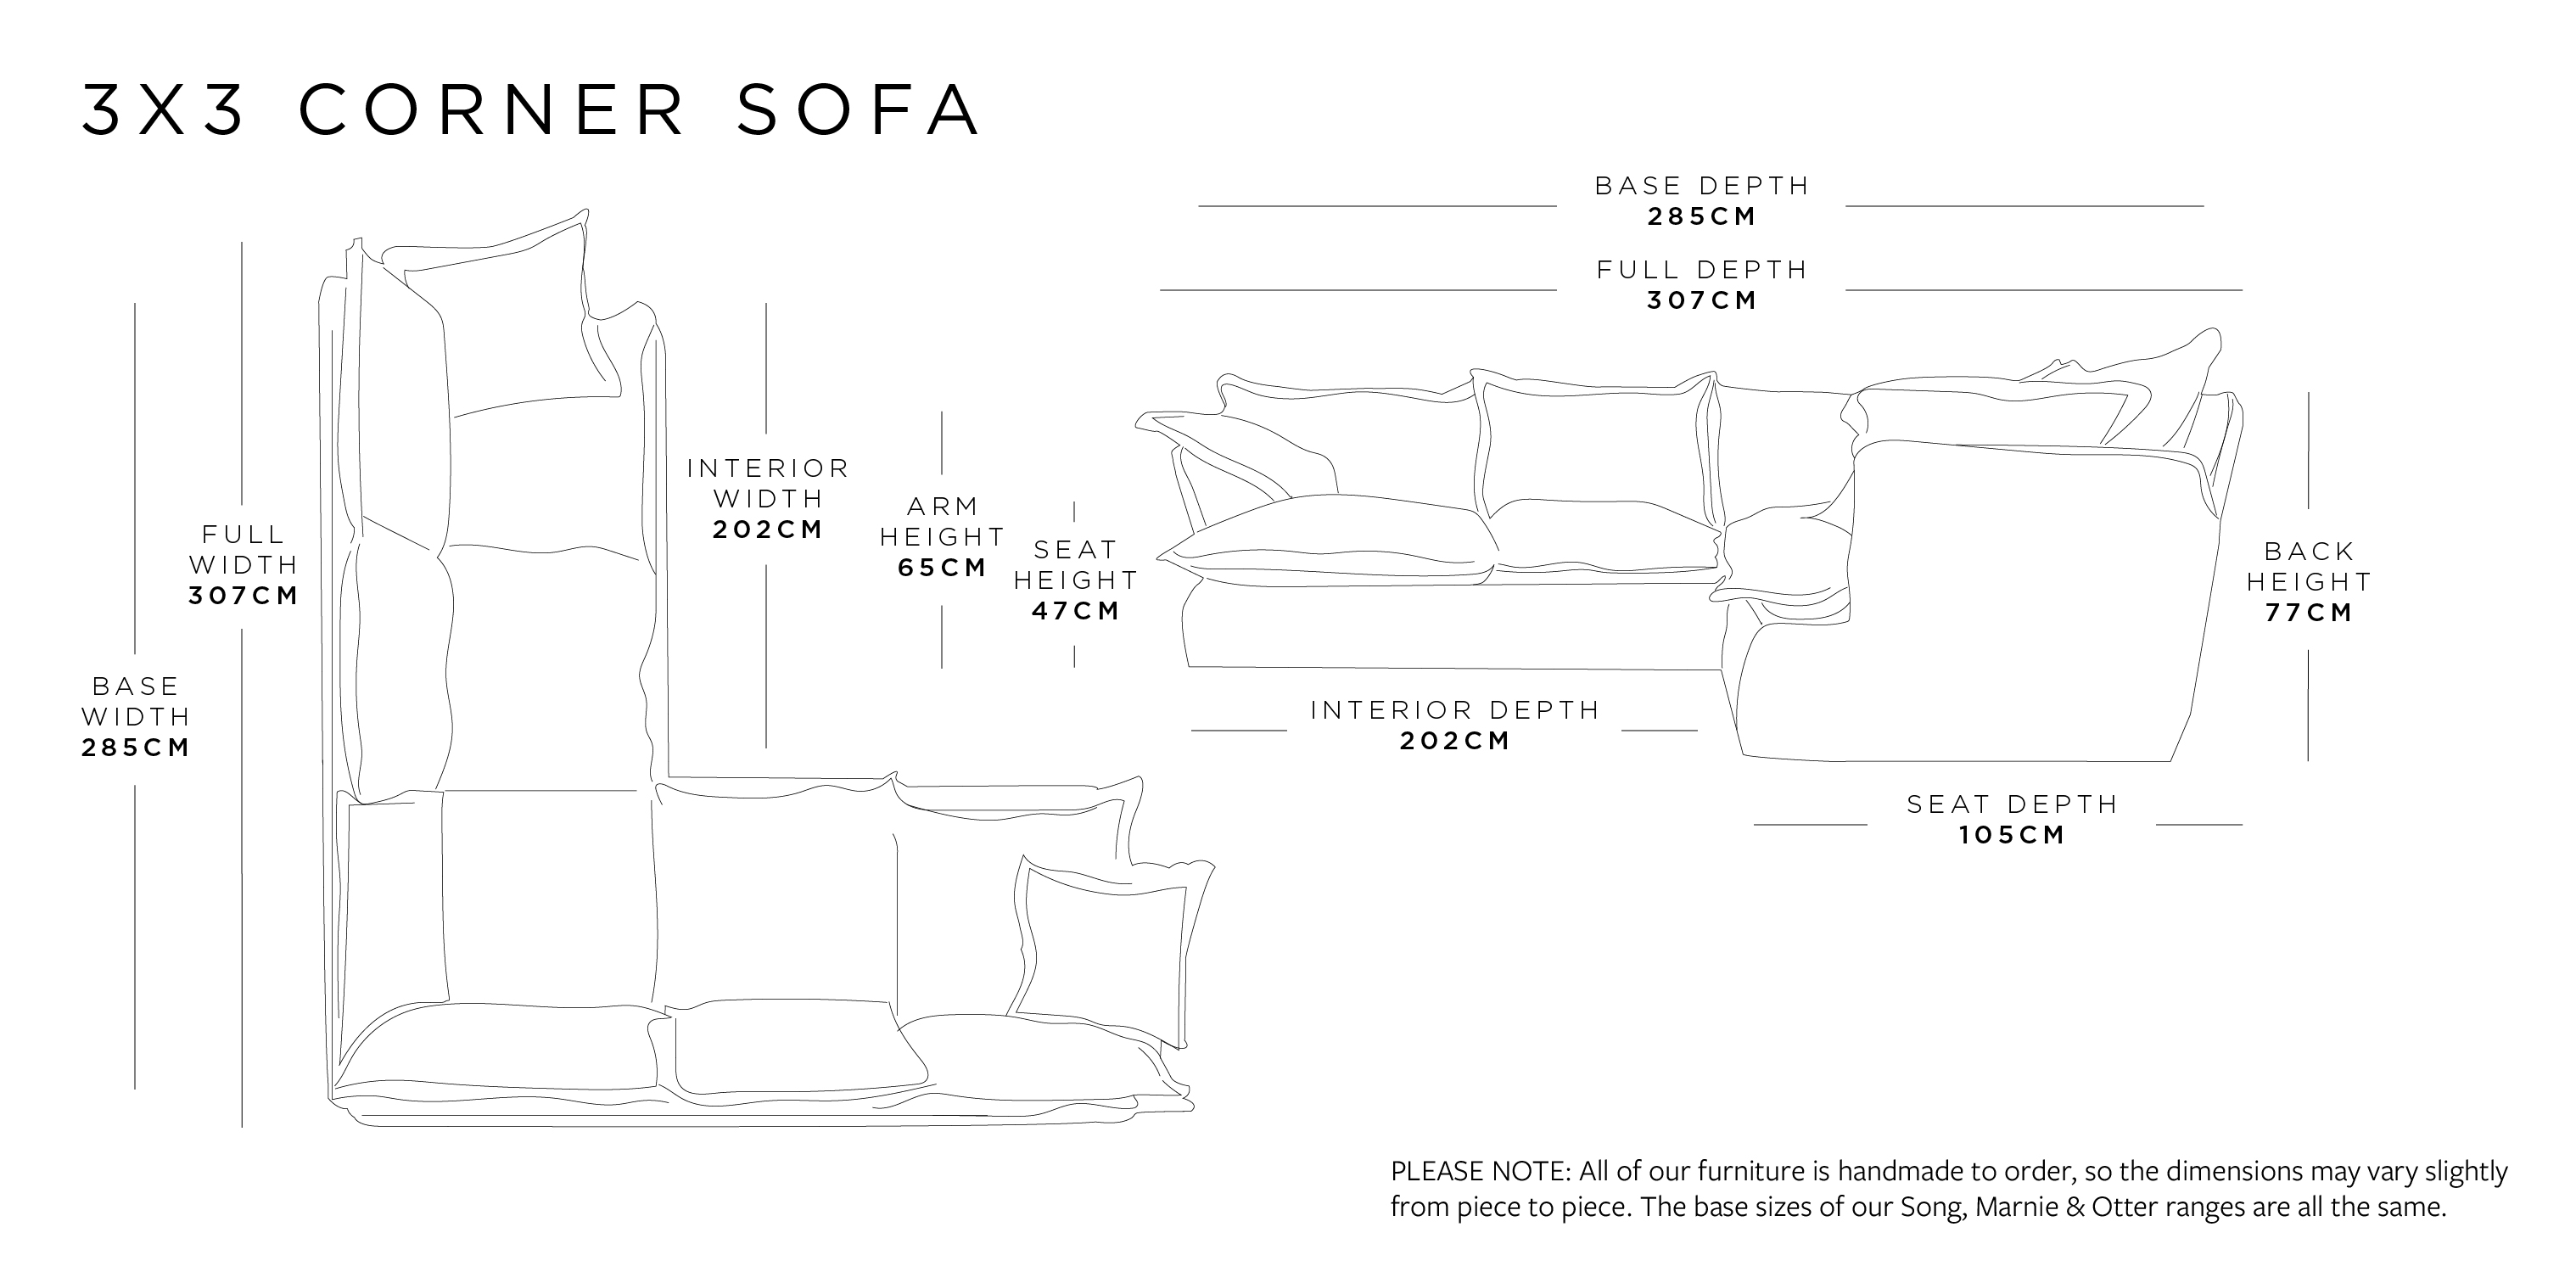 3x3 Corner Sofa | Song Range Size Guide